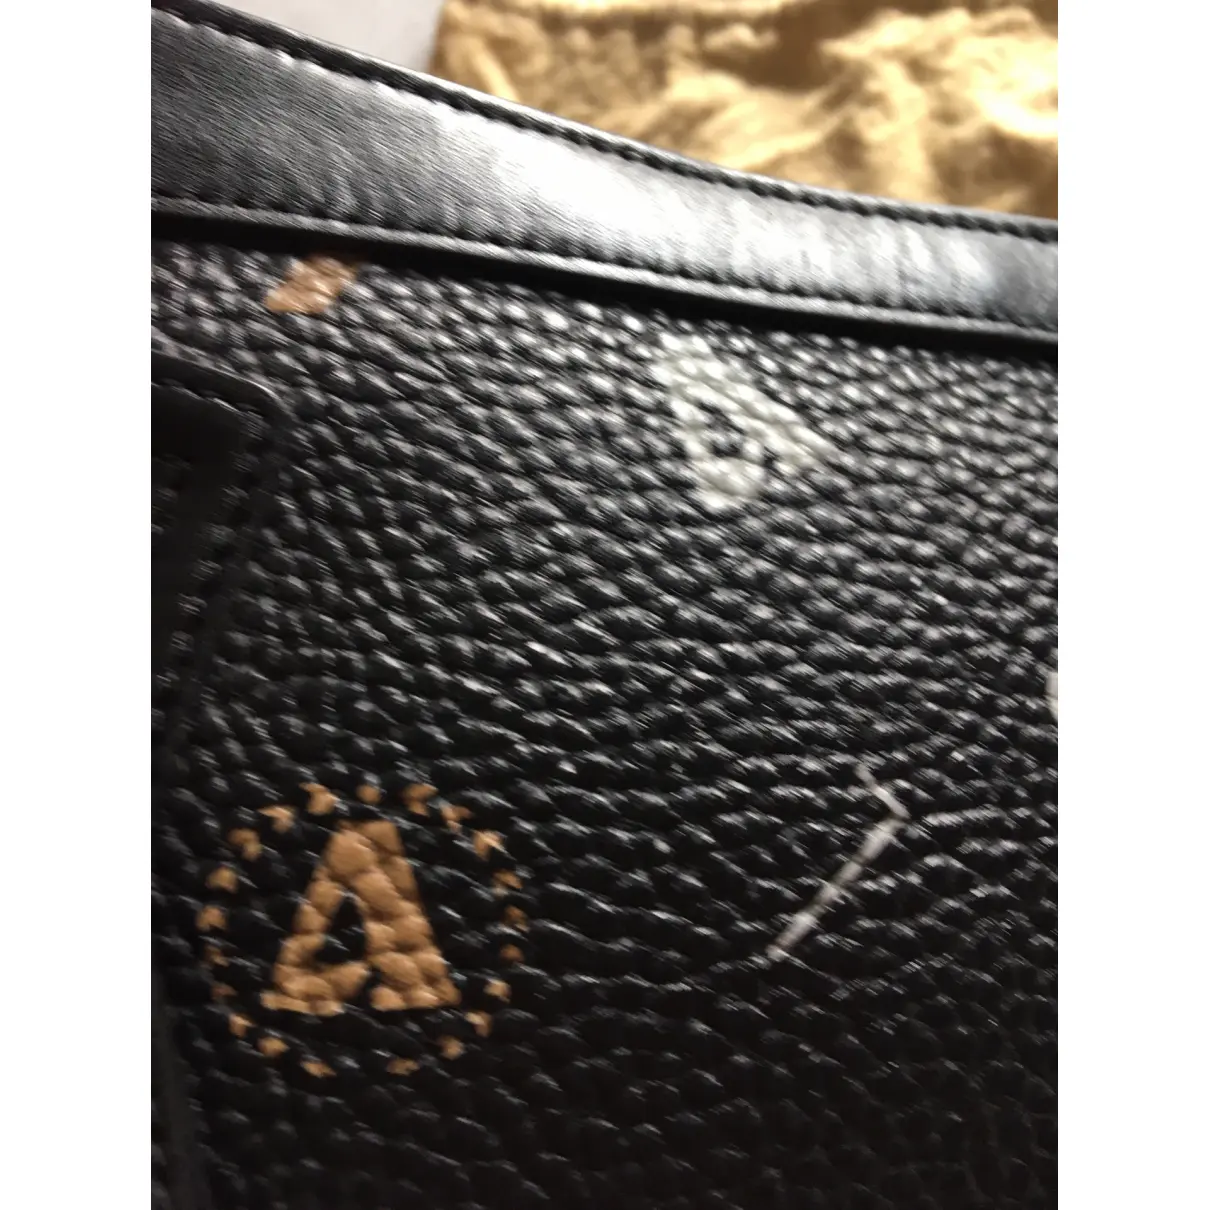 Leather handbag Valleverde